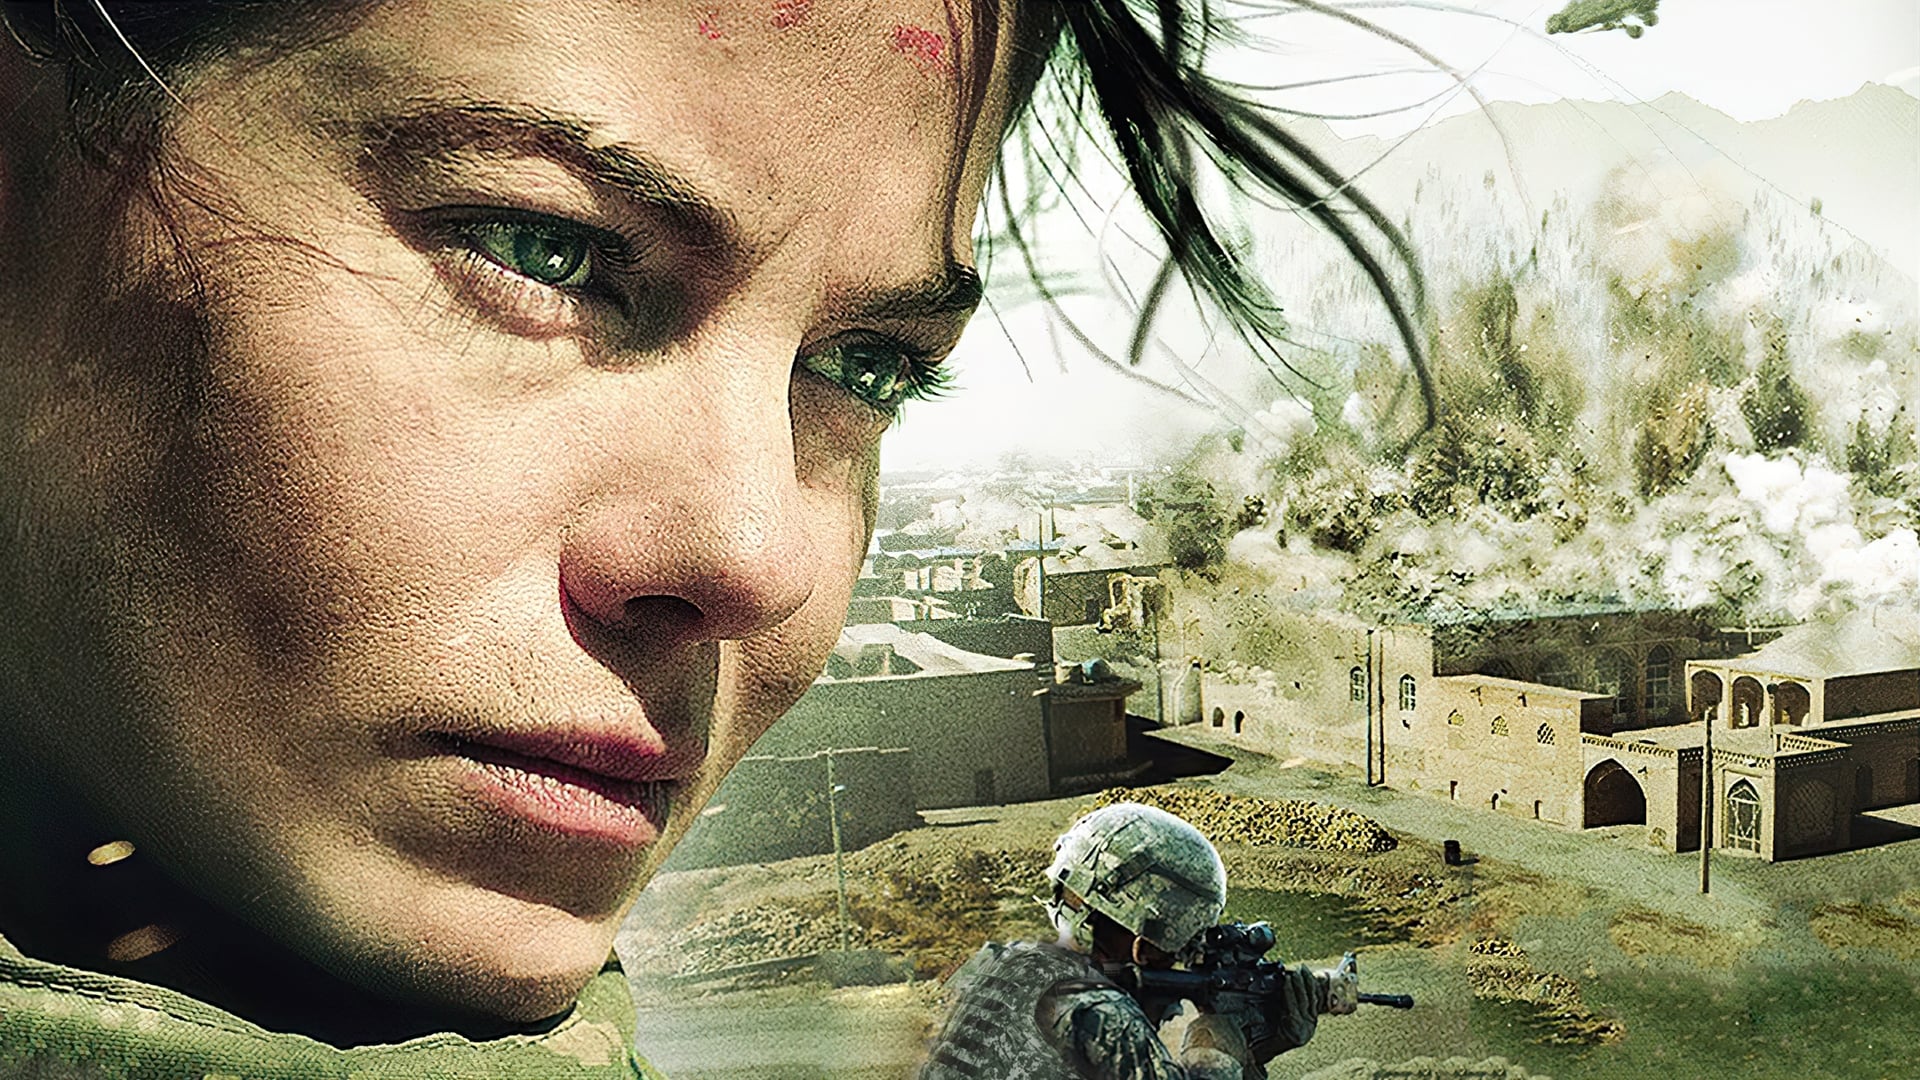 دانلود فیلم Fort Bliss 2014